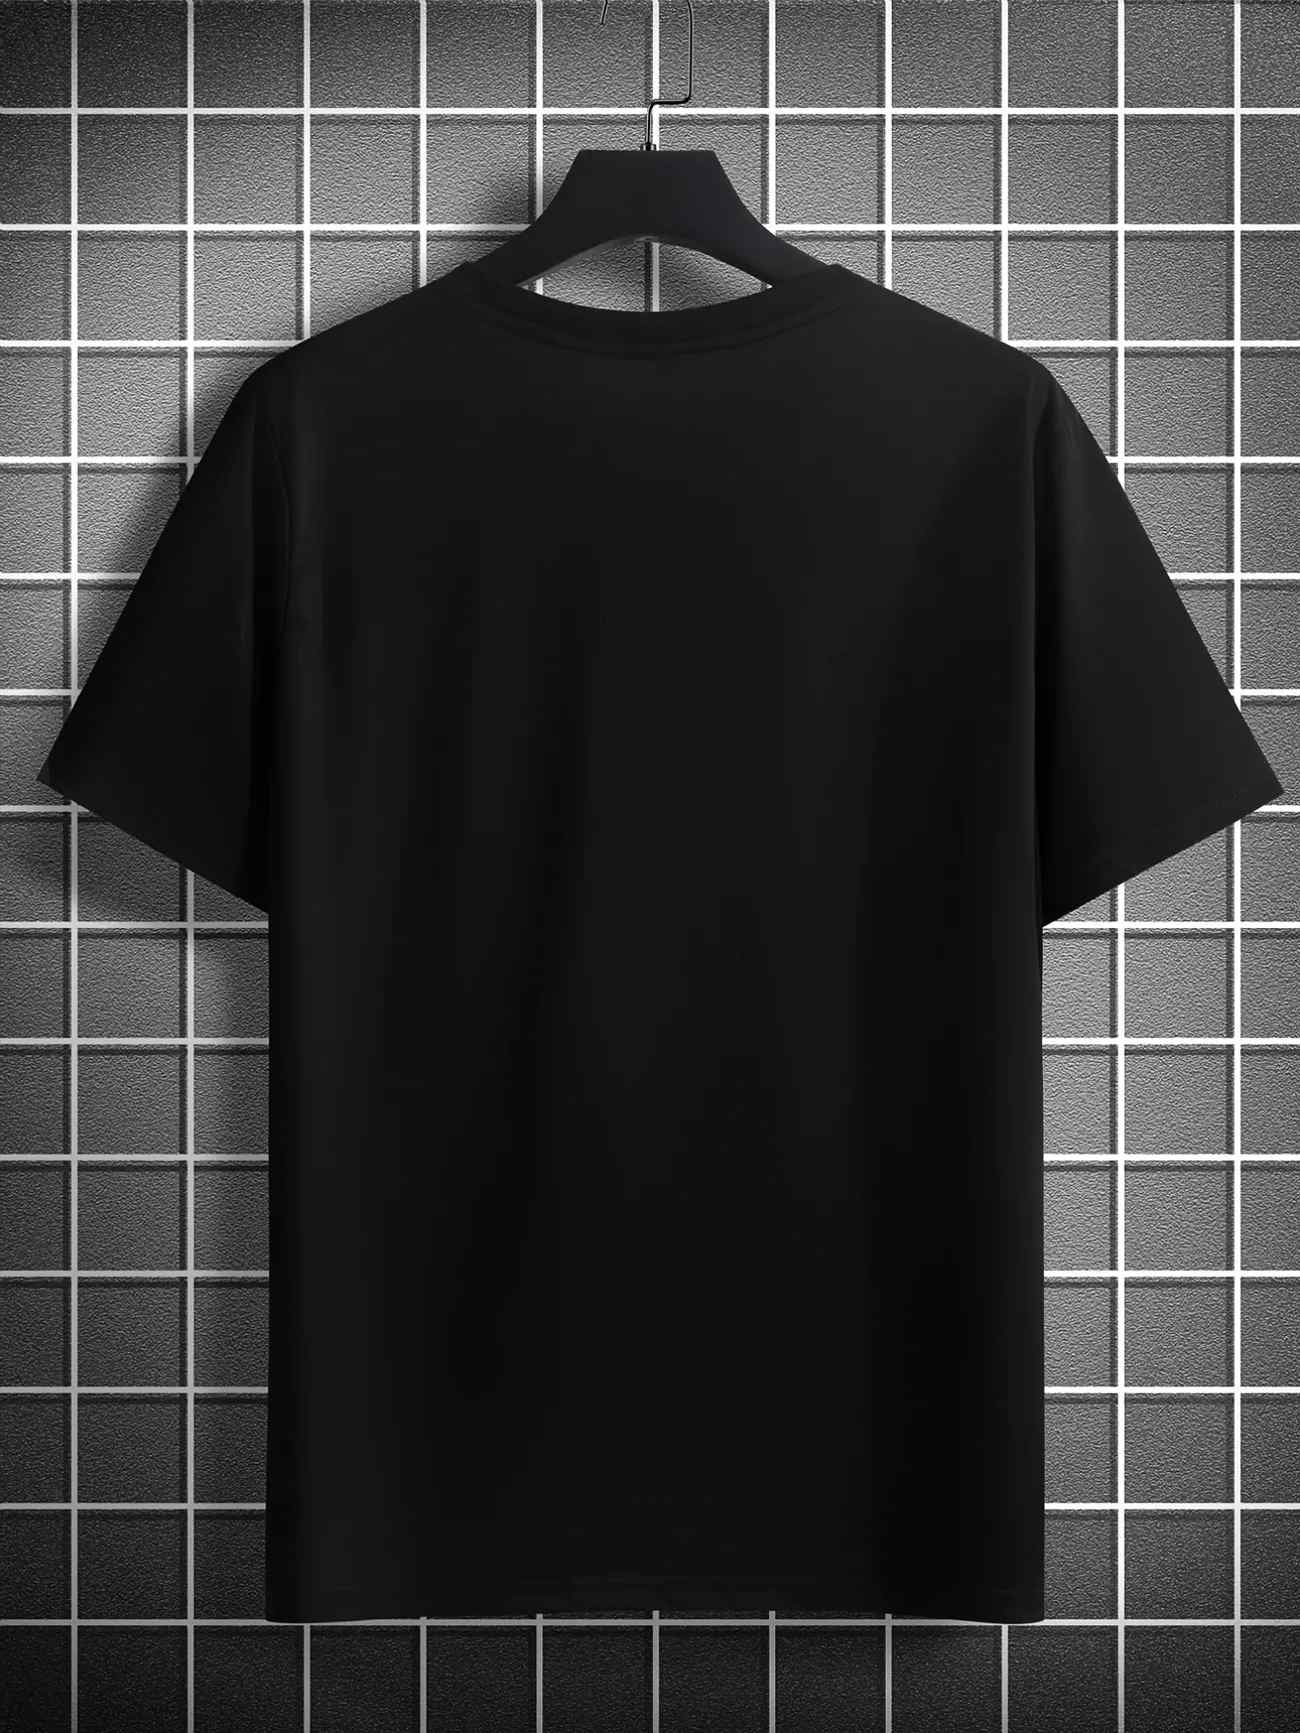 Mens Cotton Sticker Printed T-Shirt TTMPS80 - Black